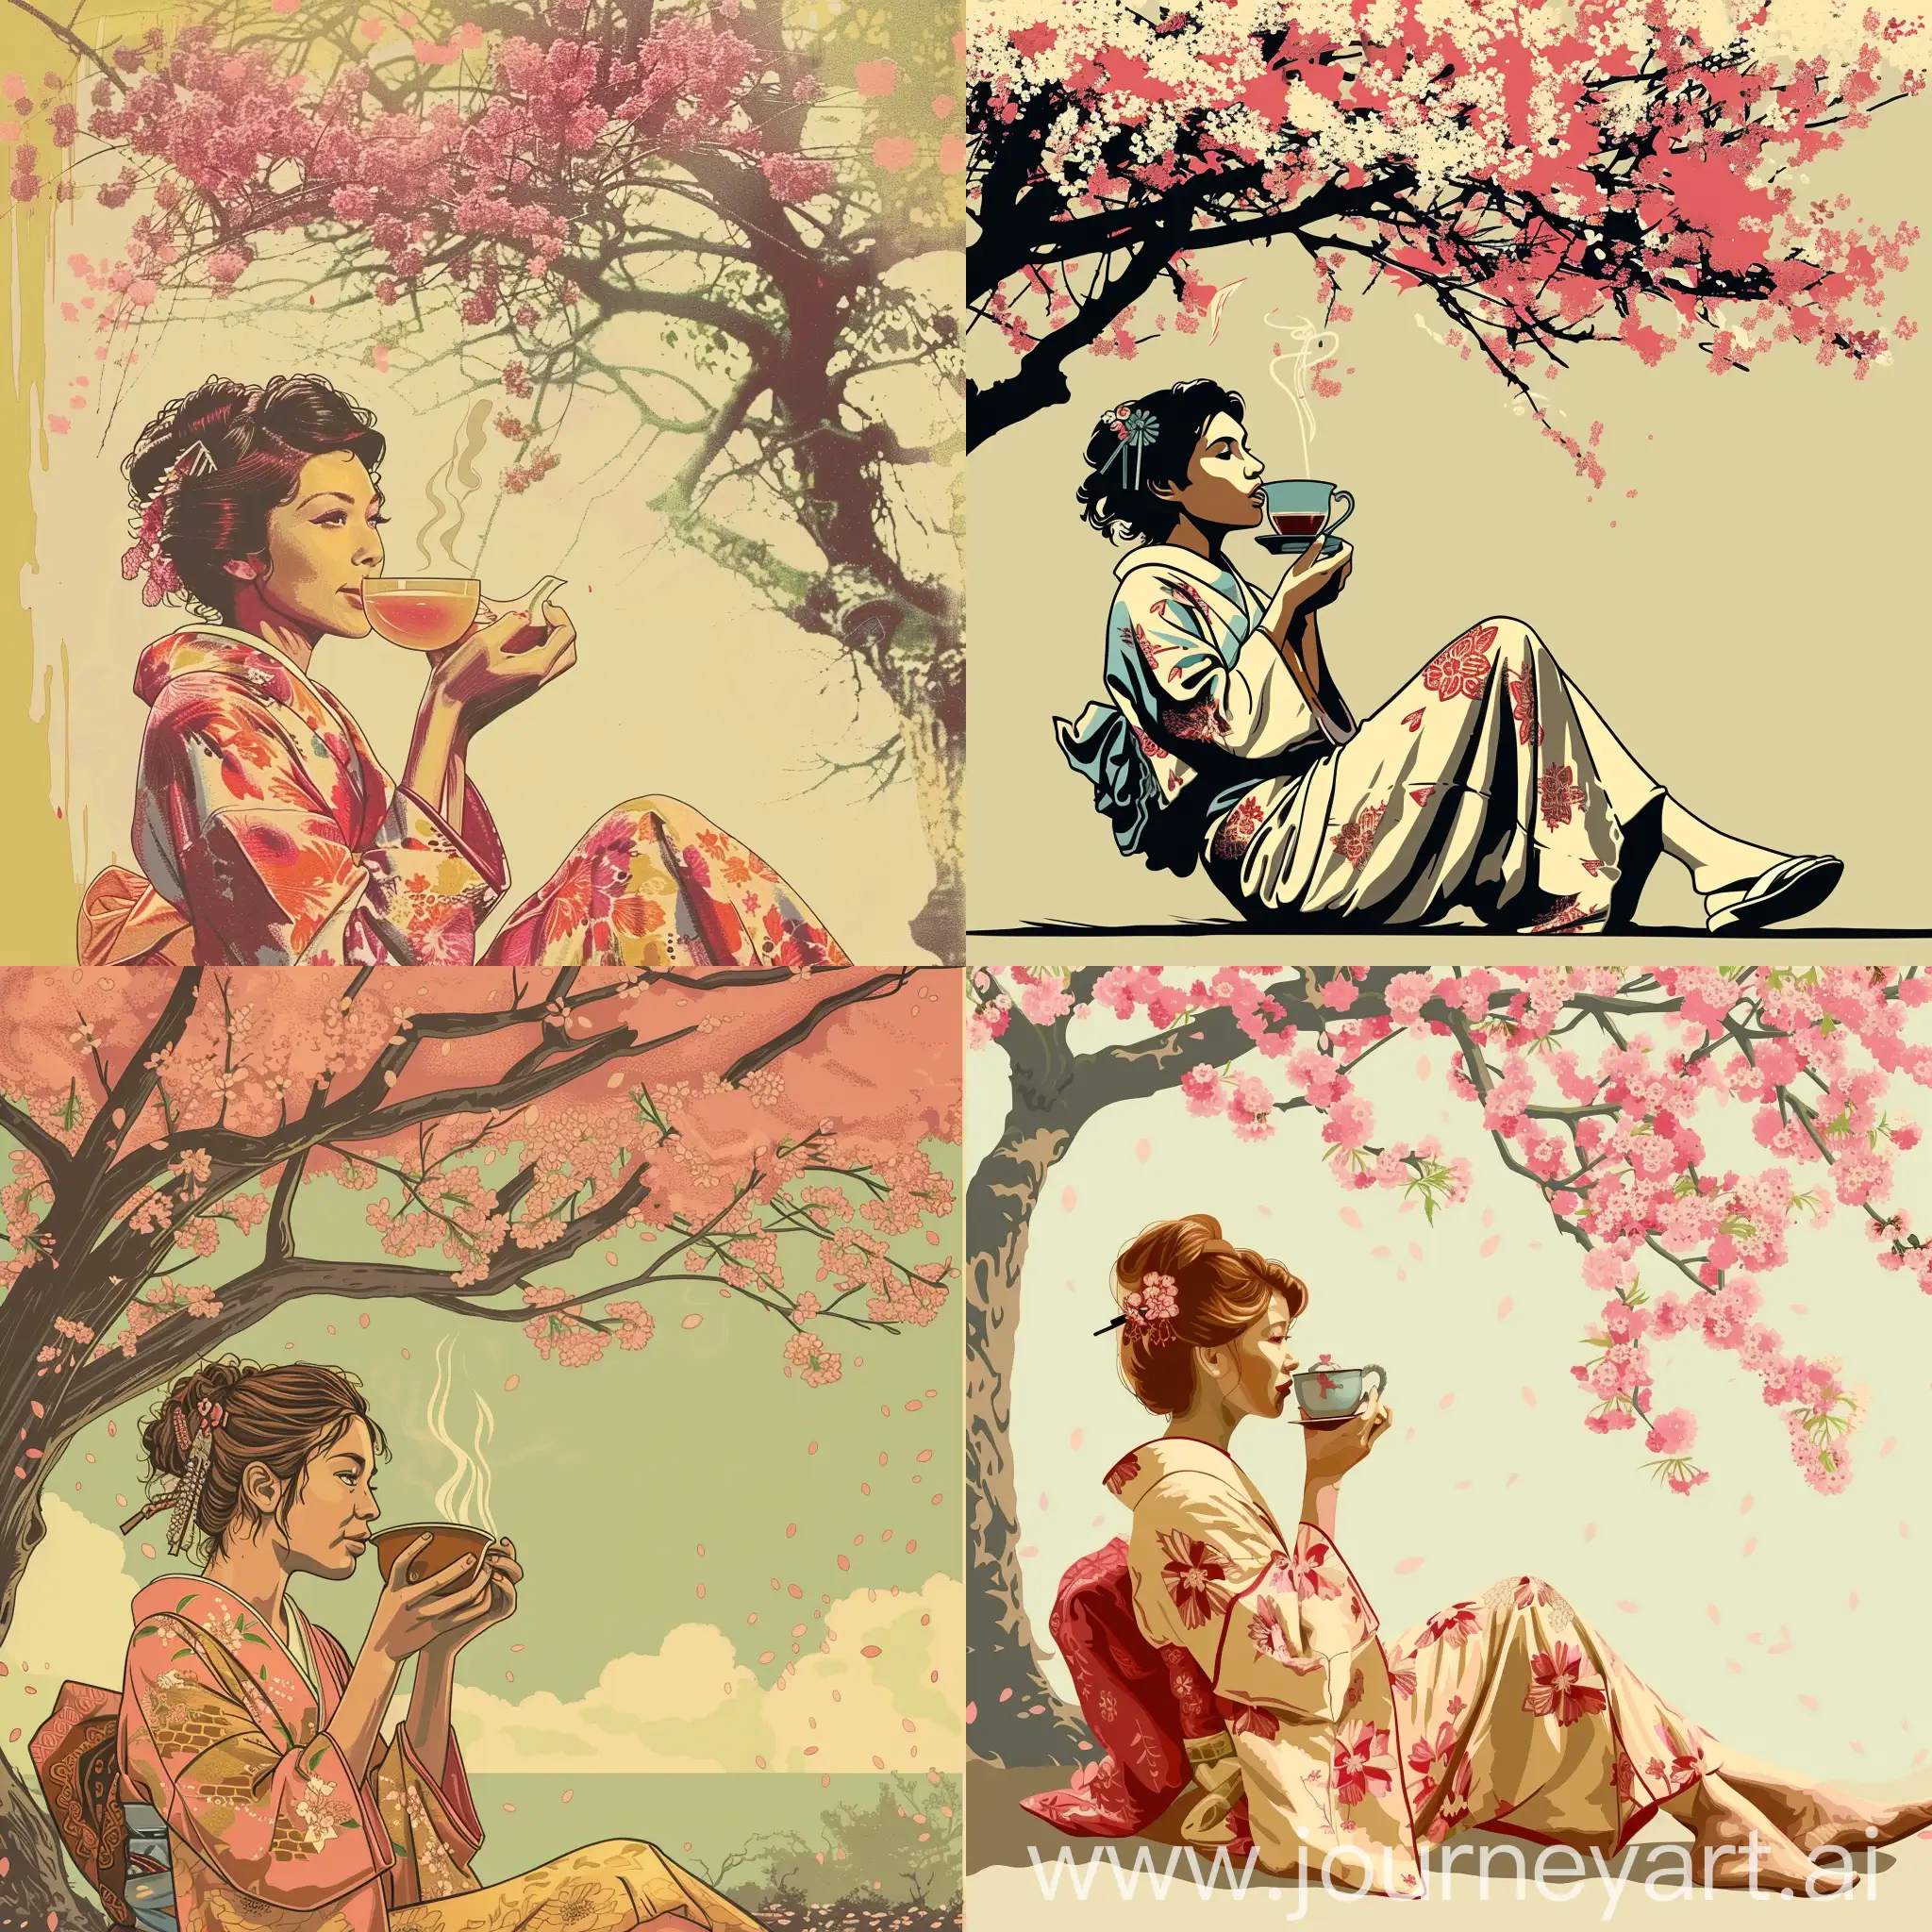 An Japanese women in kimono drinking tea while sitting under a sakura tree in style of retro 70's or 80's pulp fiction art 